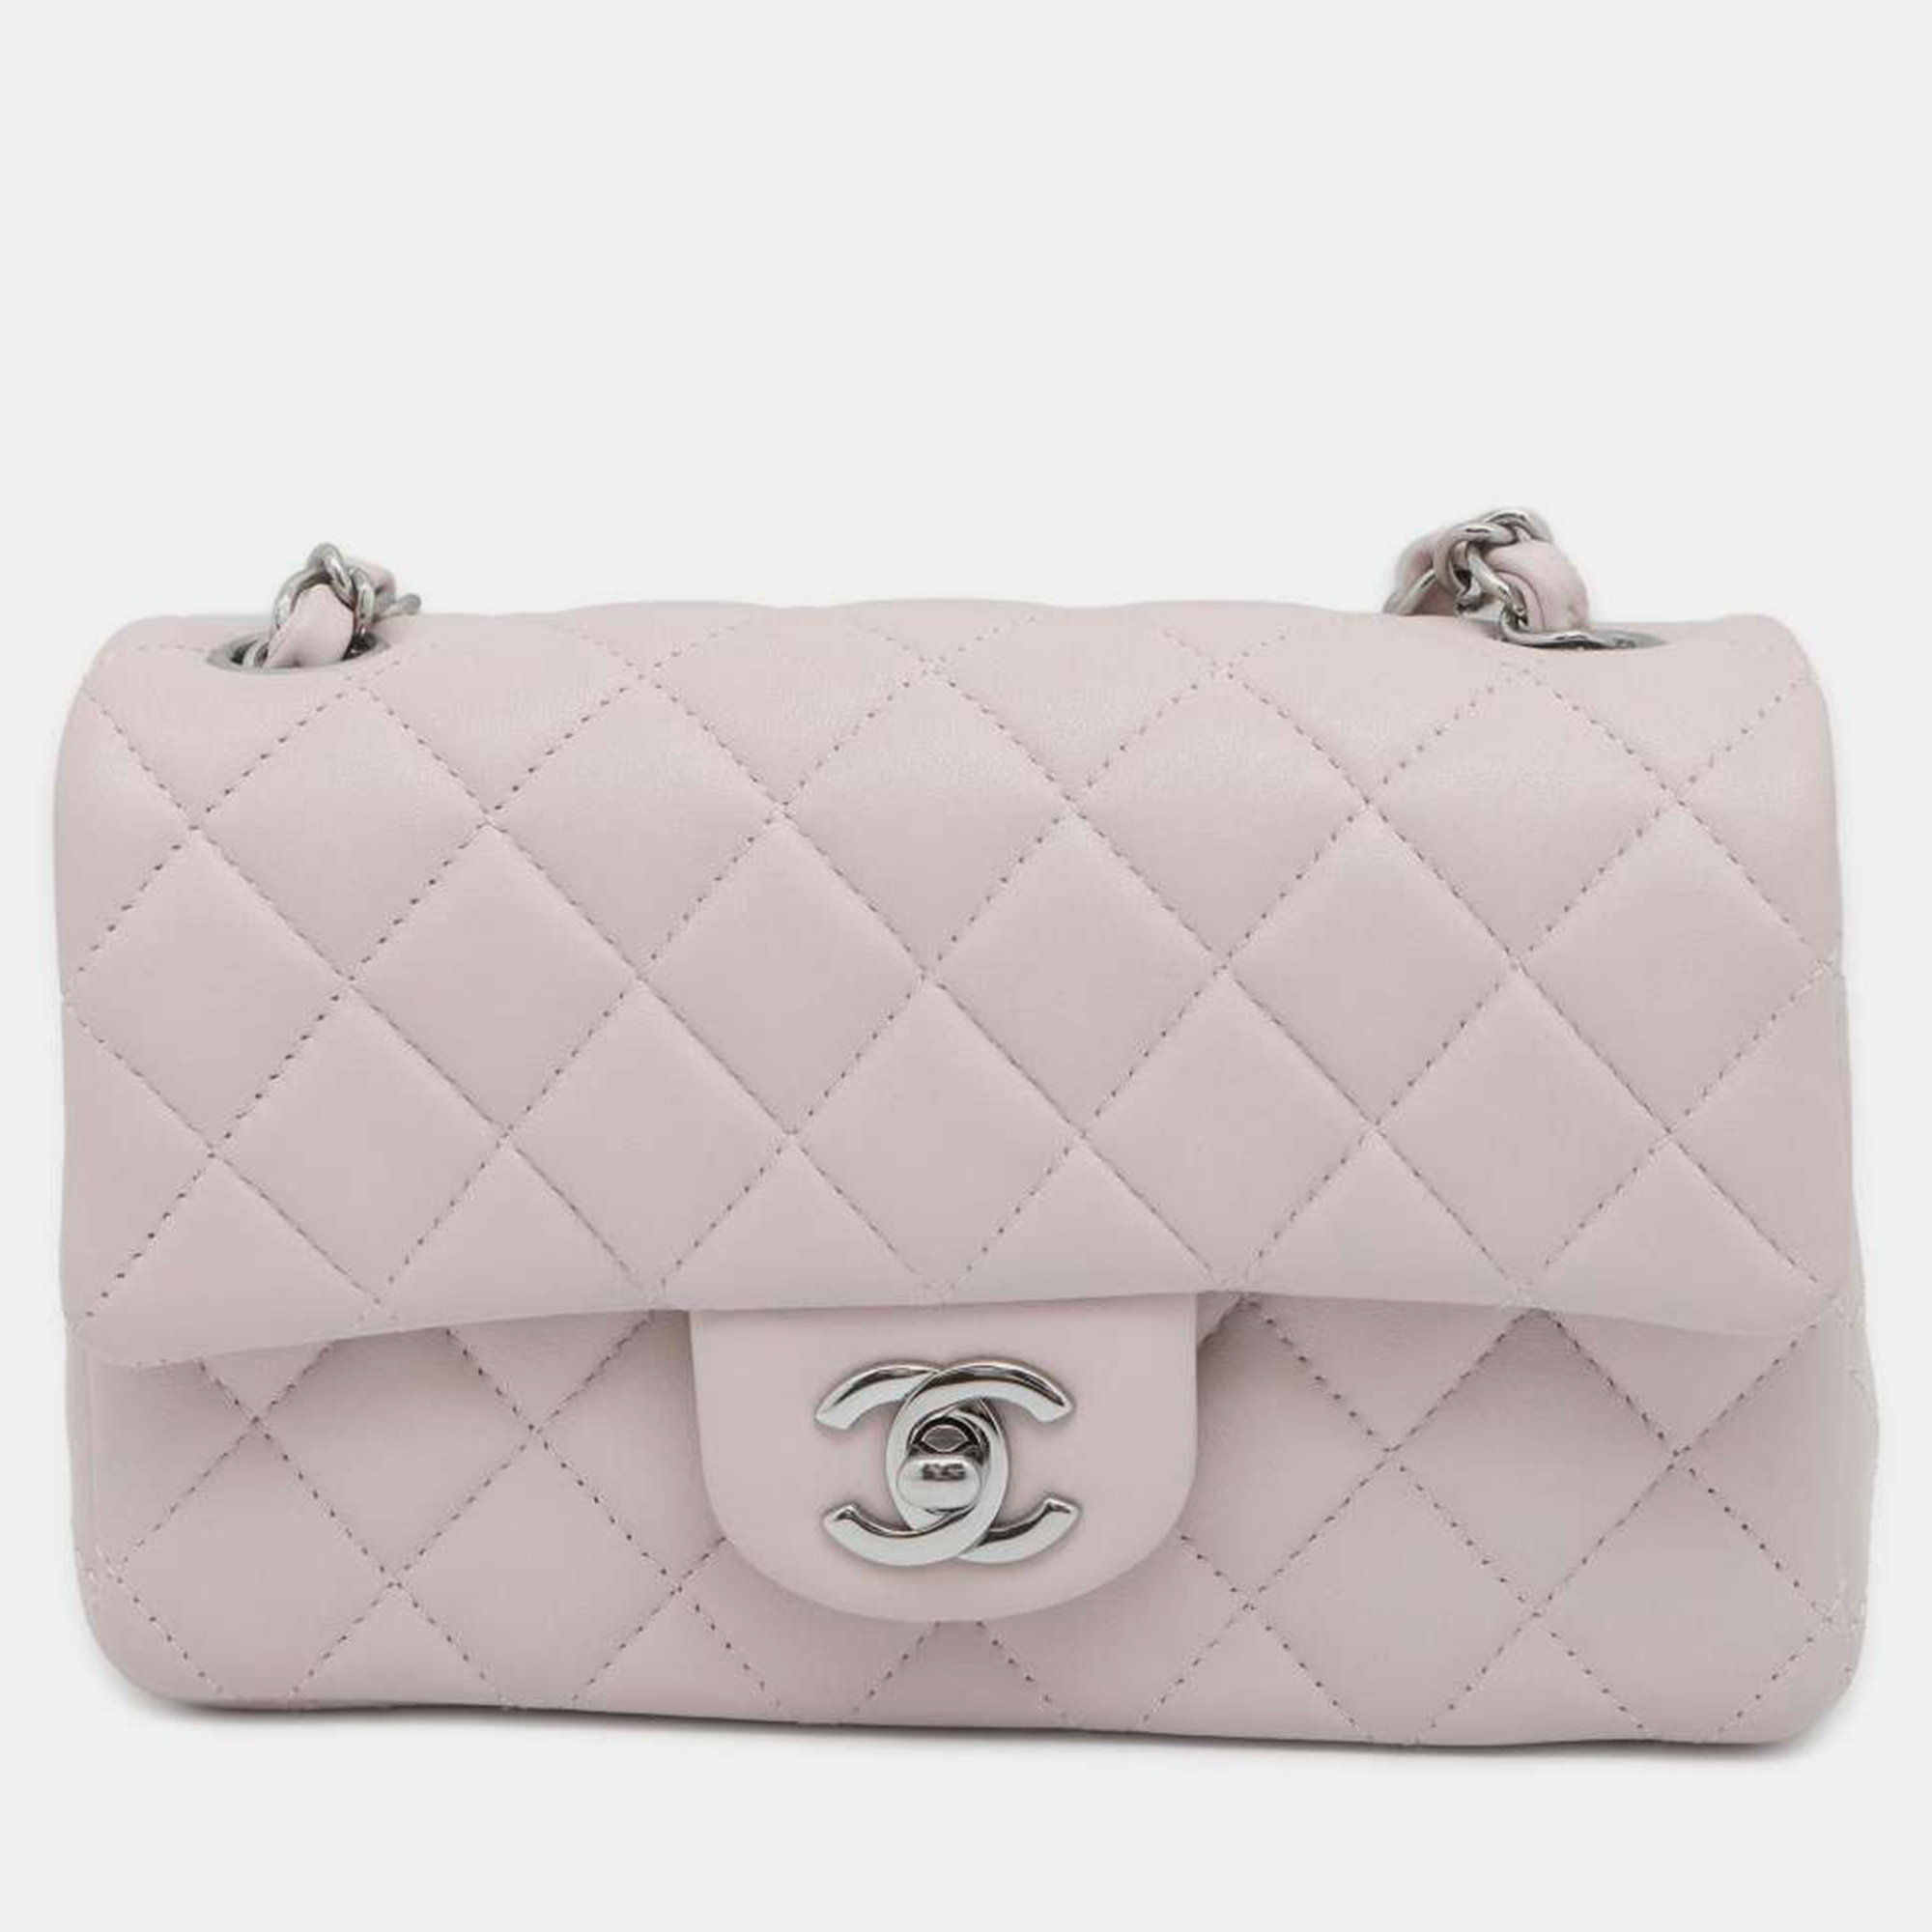 Chanel pink lambskin mini flap bag